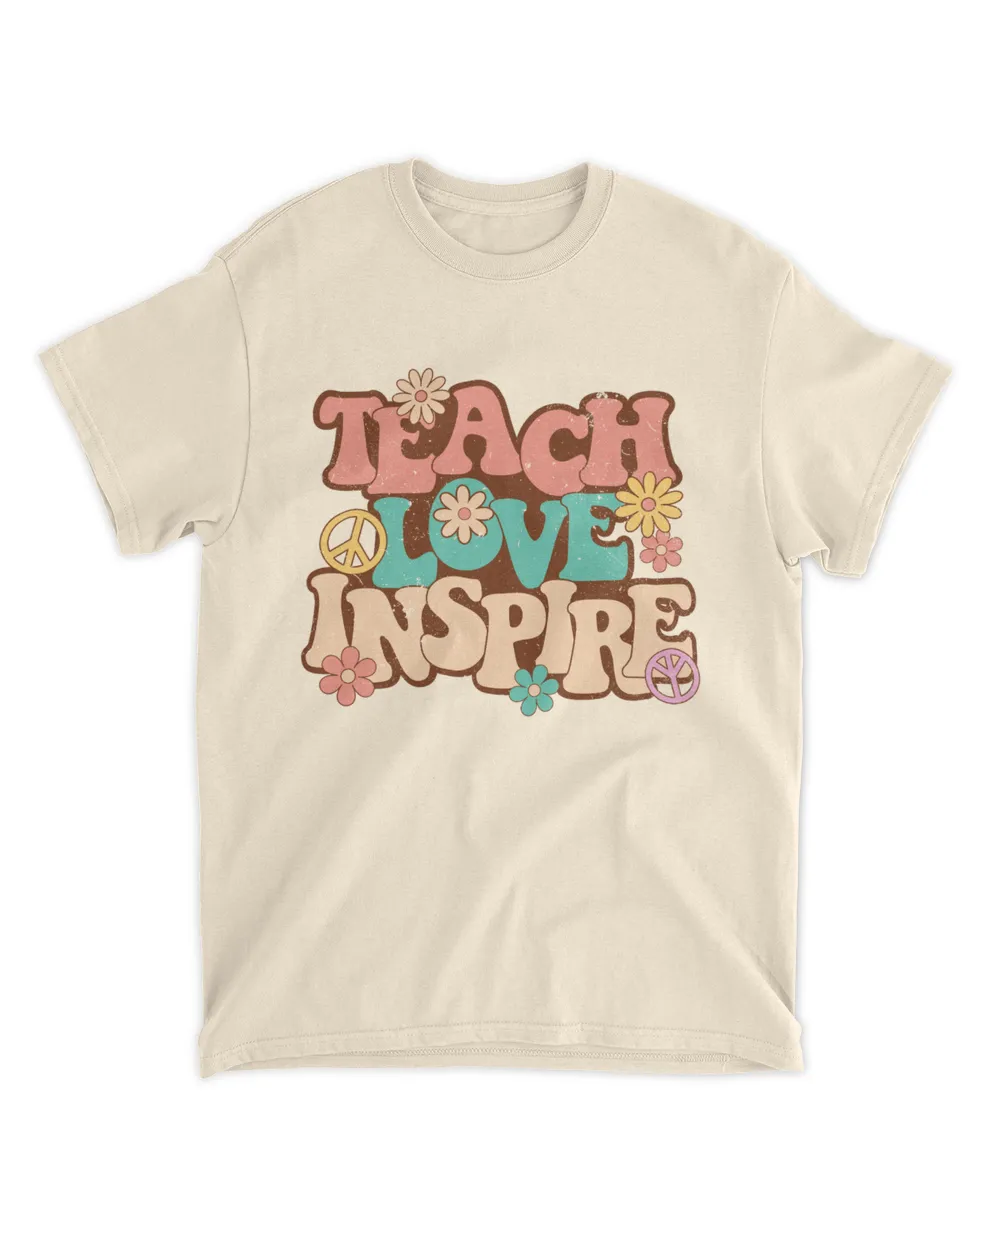 Teach Love Inspire Back to School(8)